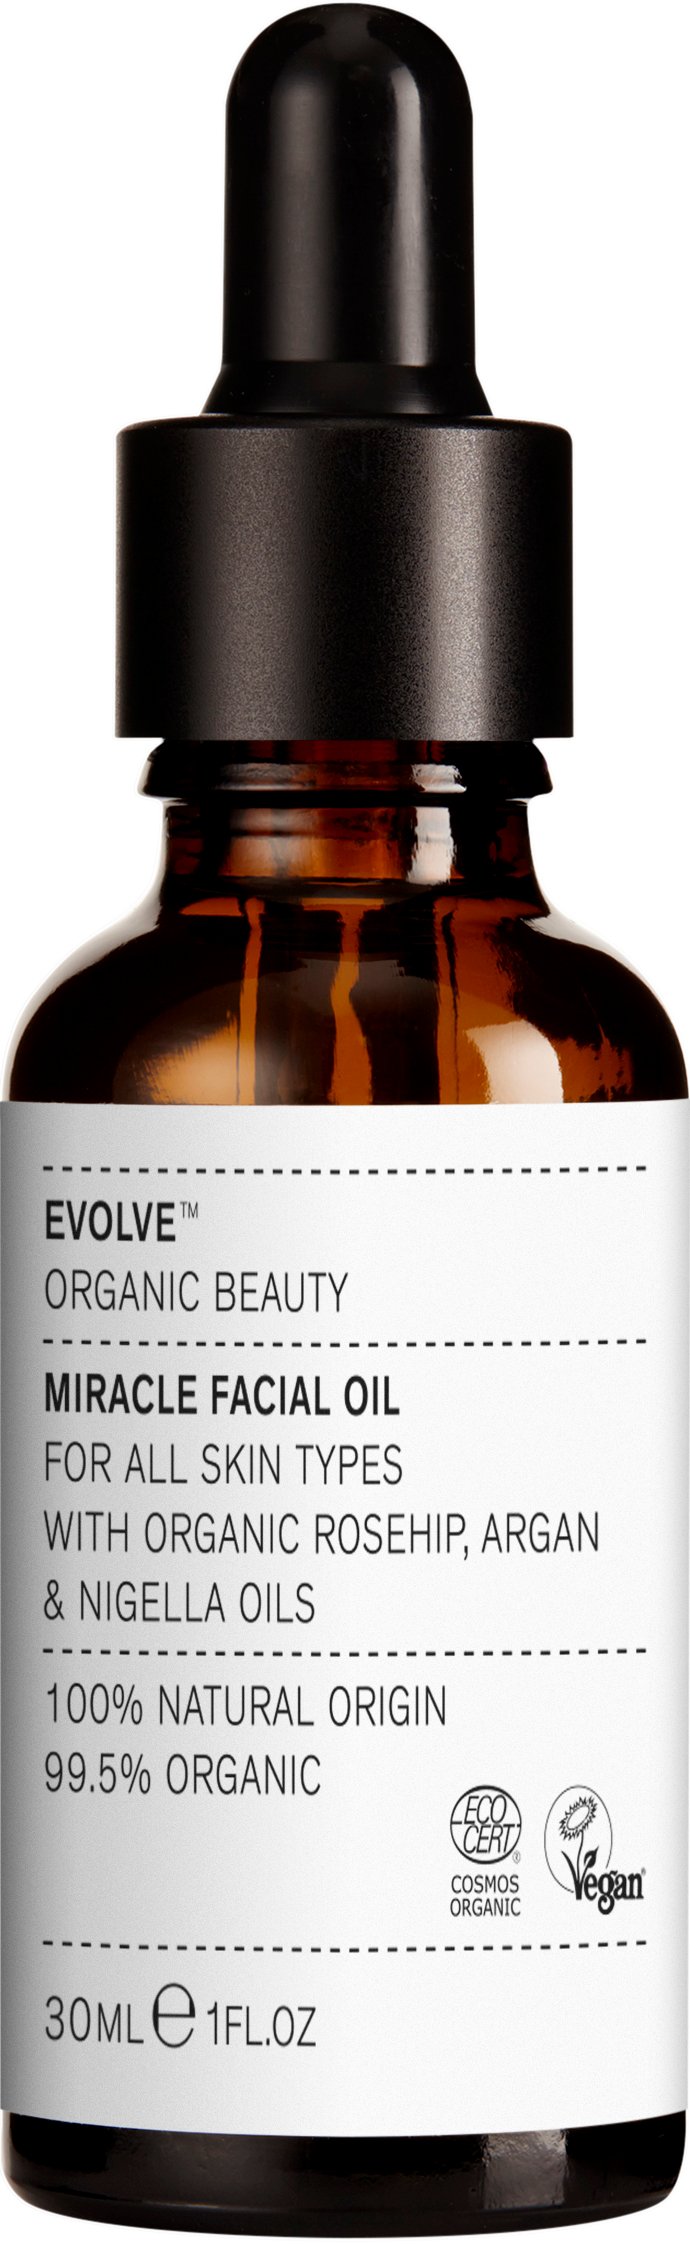 Evolve Organic Beauty Miracle Facial Oil 30 ml